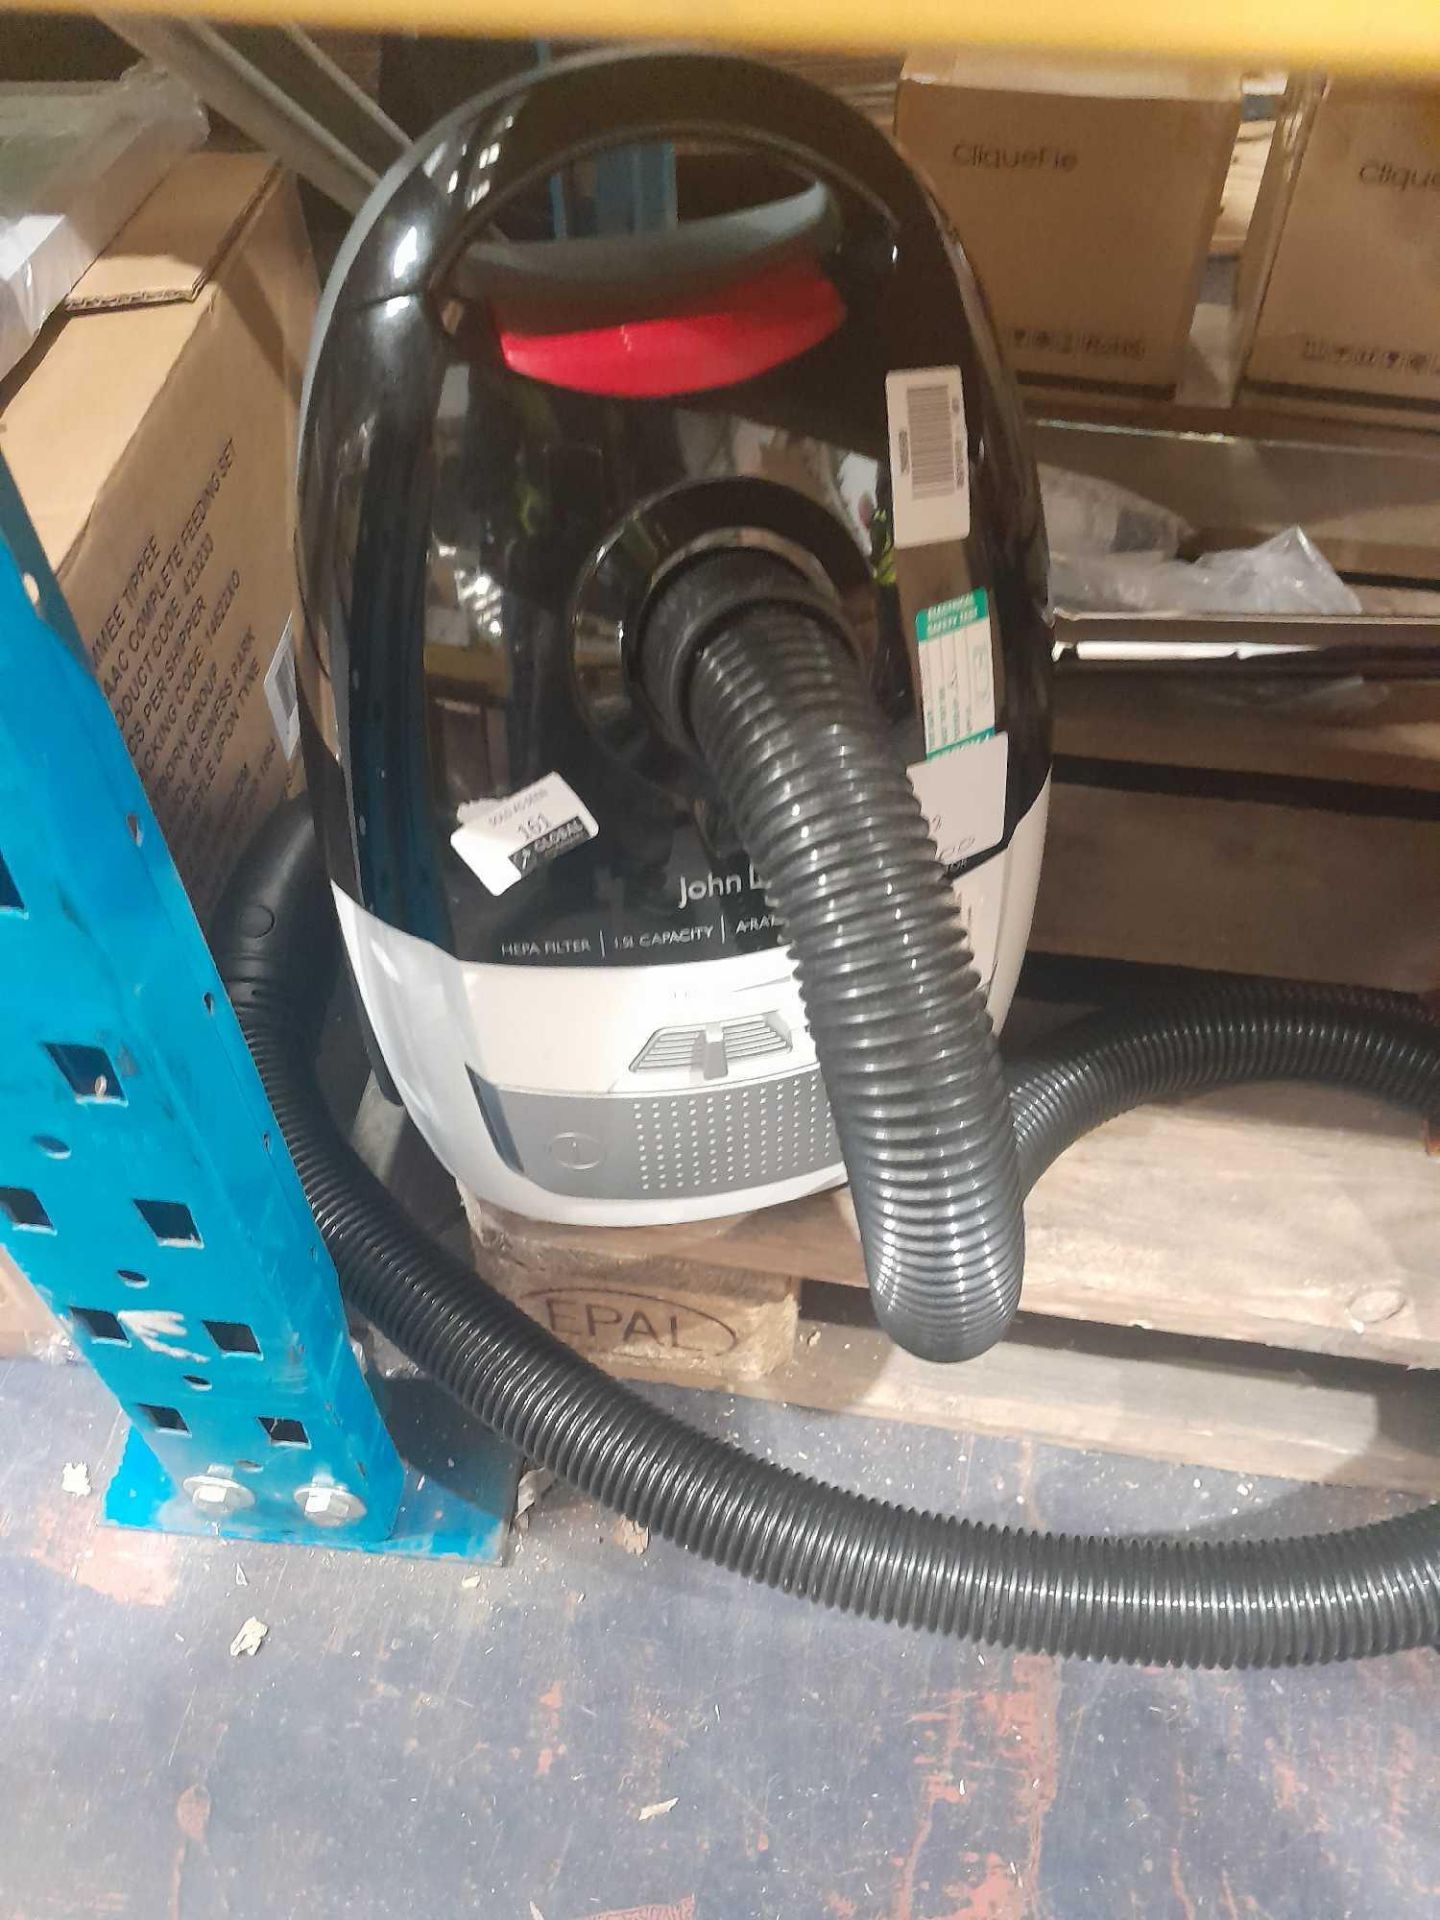 RRP £80 Unboxed John Lewis Corded Vacuum Cleaner (Black/White) - Image 2 of 2